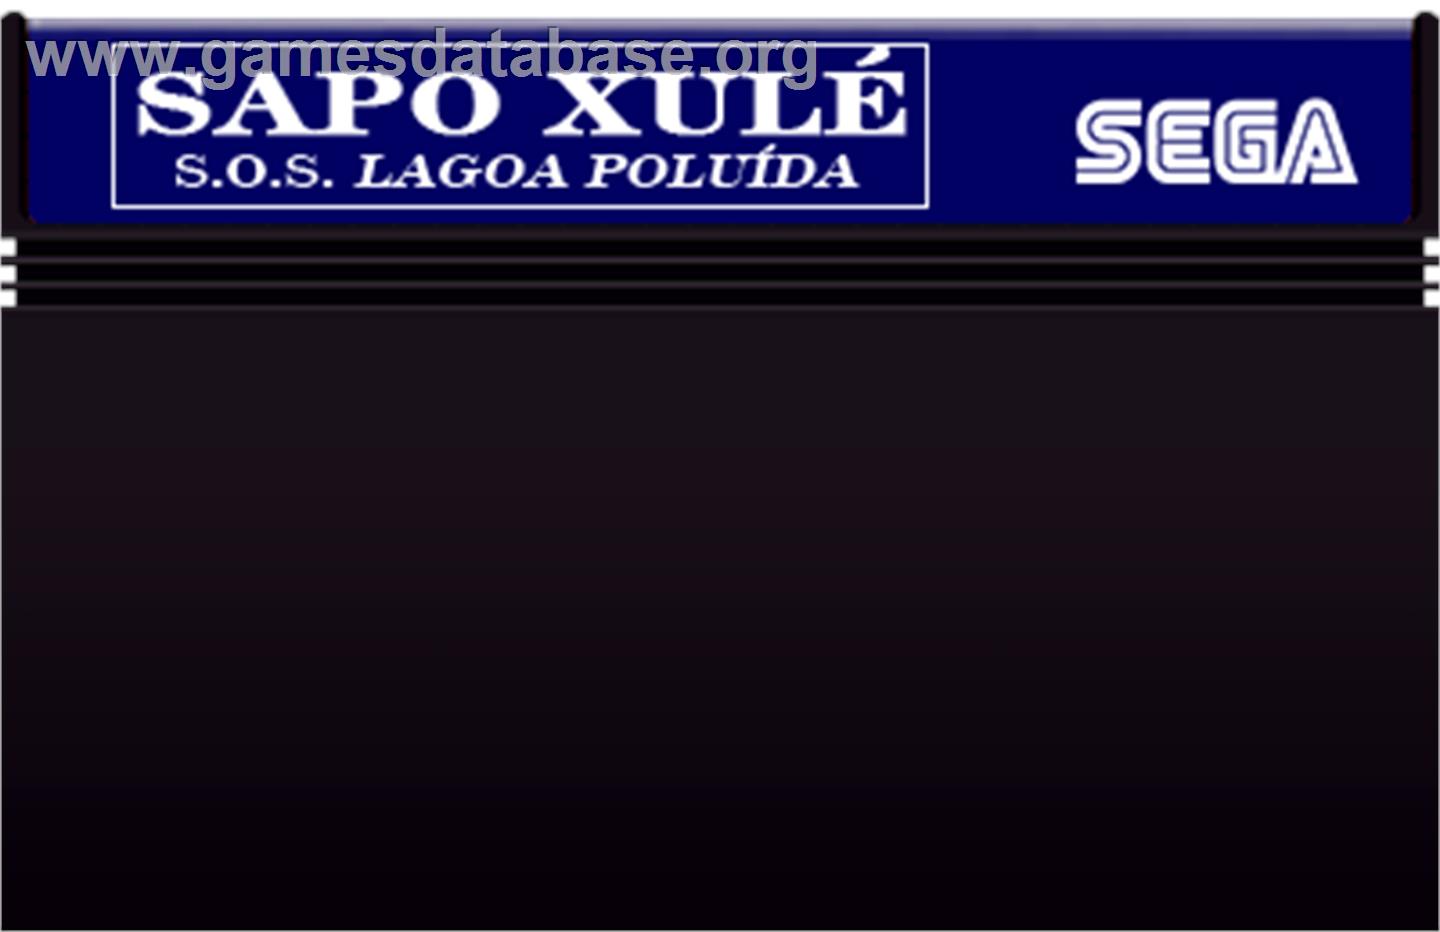 Sapo Xulé: S.O.S. Lagoa Poluída - Sega Master System - Artwork - Cartridge